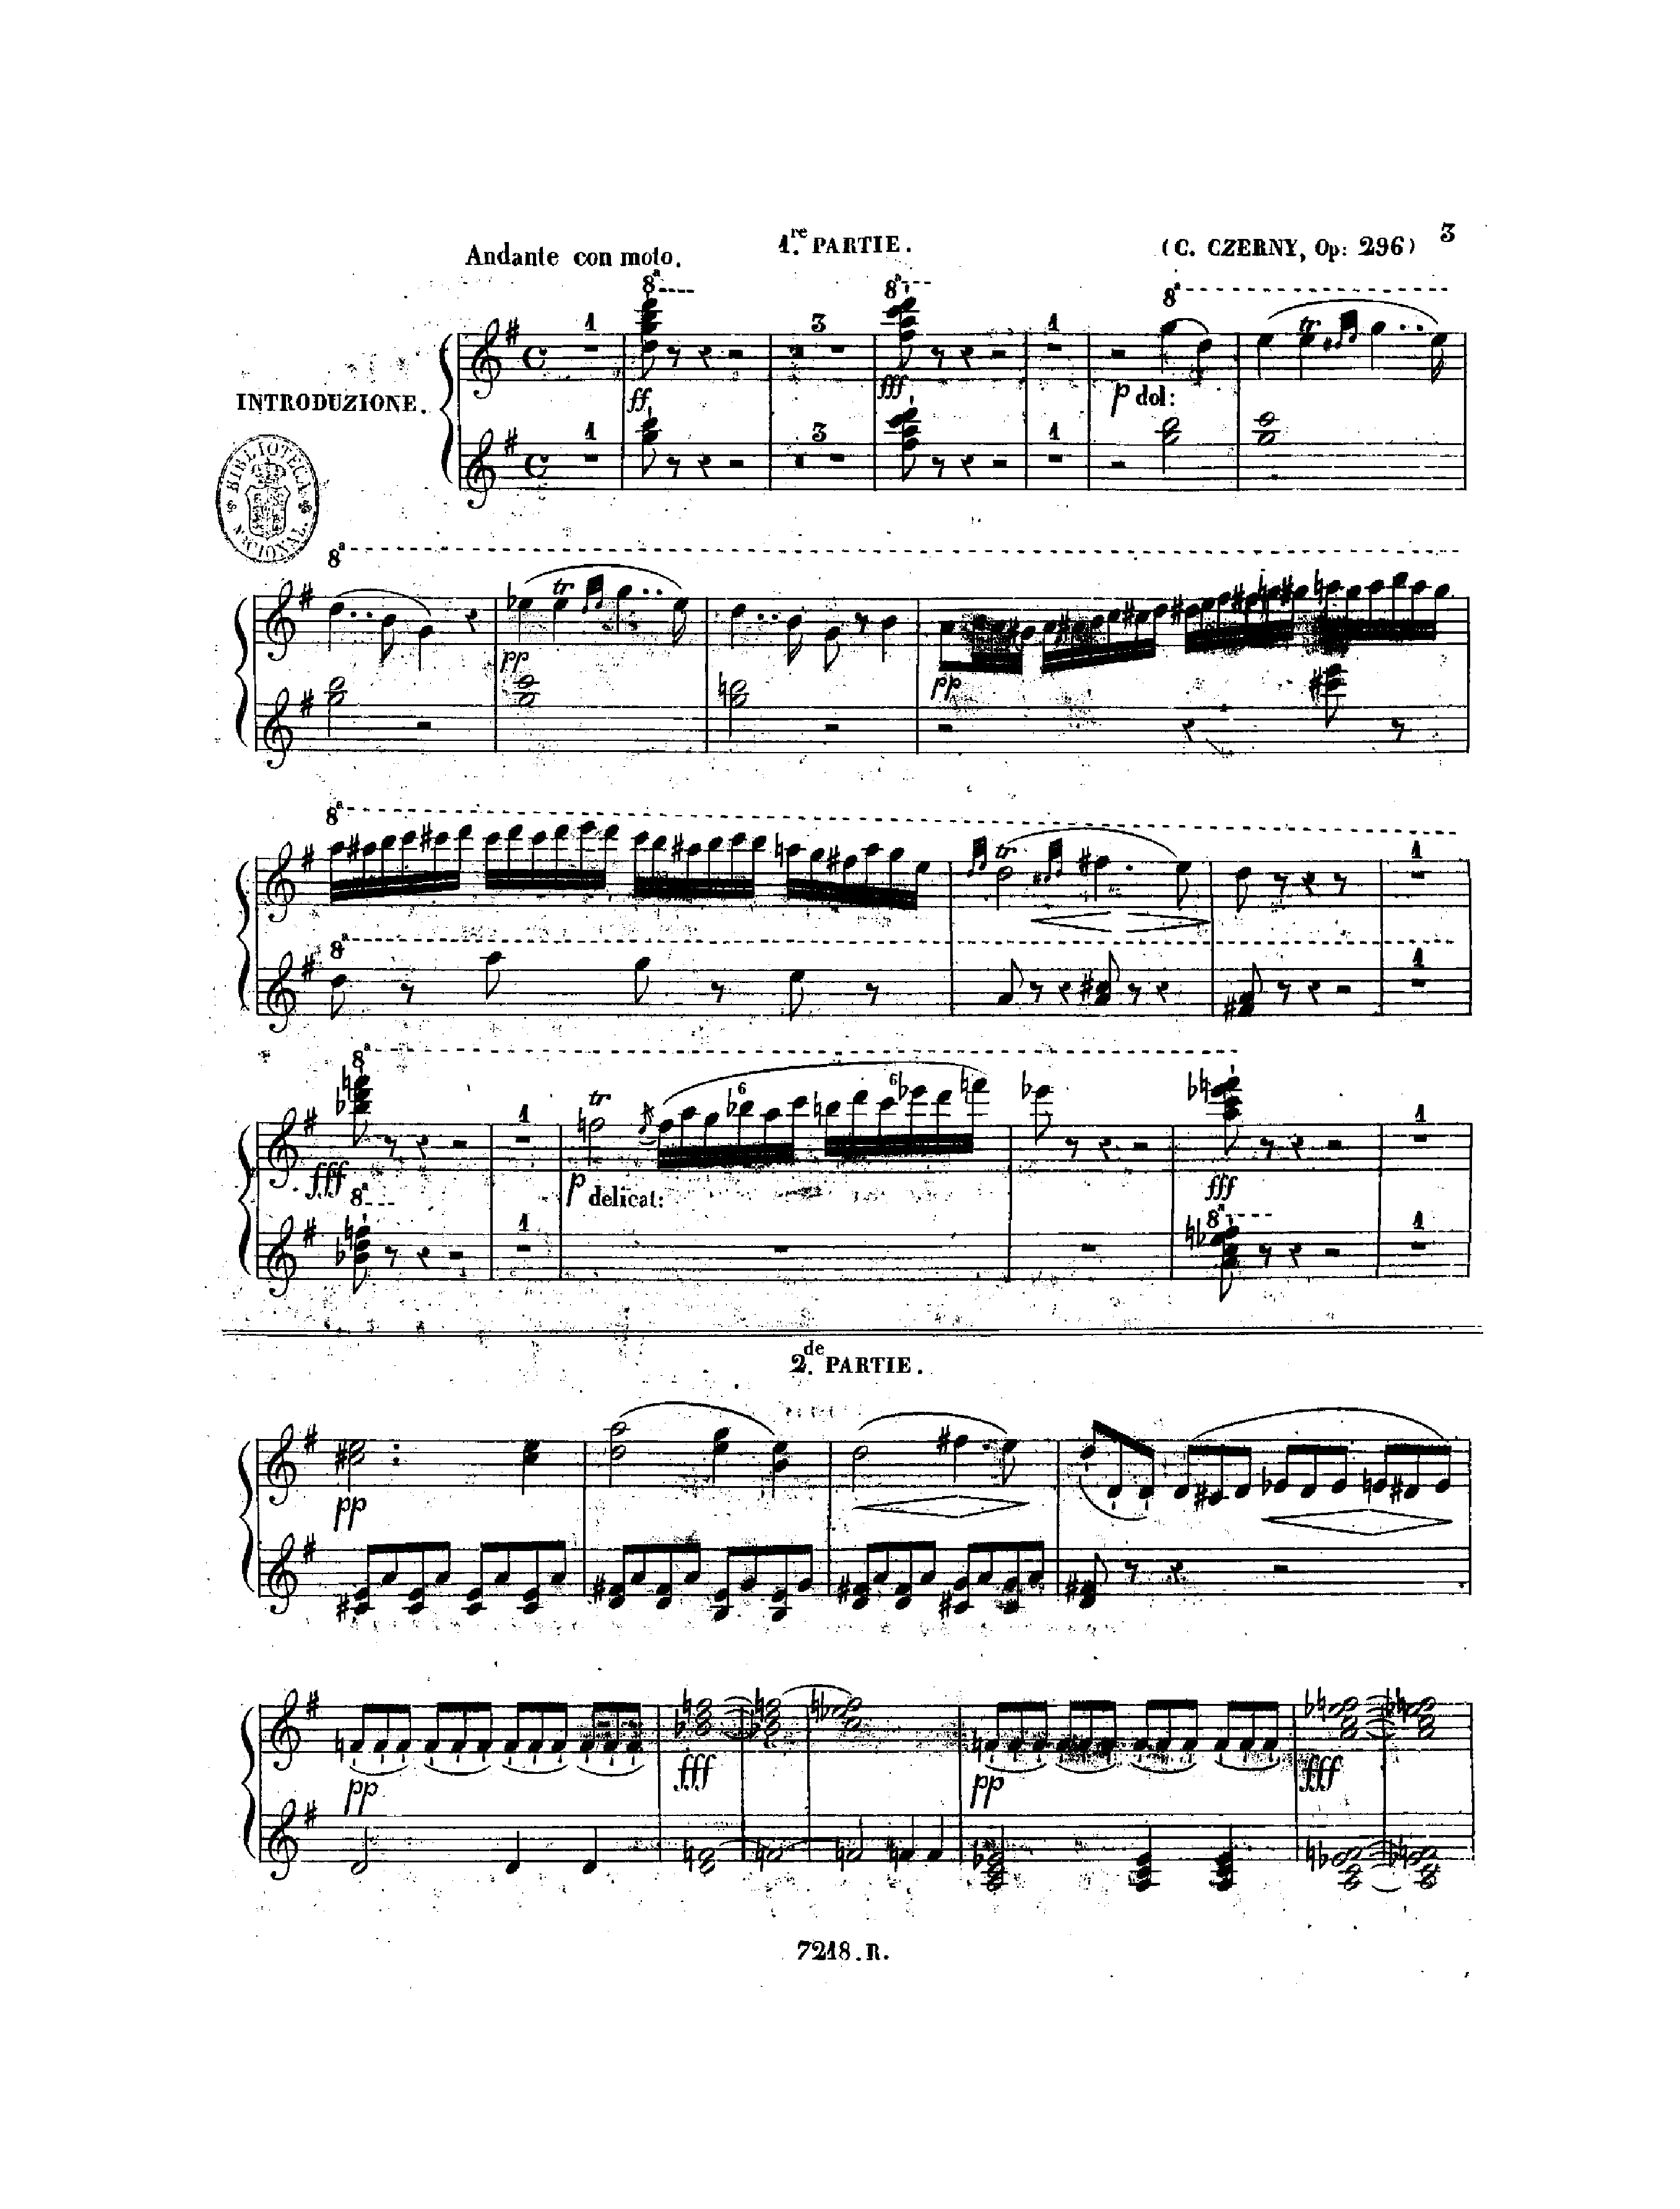 Czerny, Karl - Polonaise brillante, Op.296 Sheet music for Piano ...